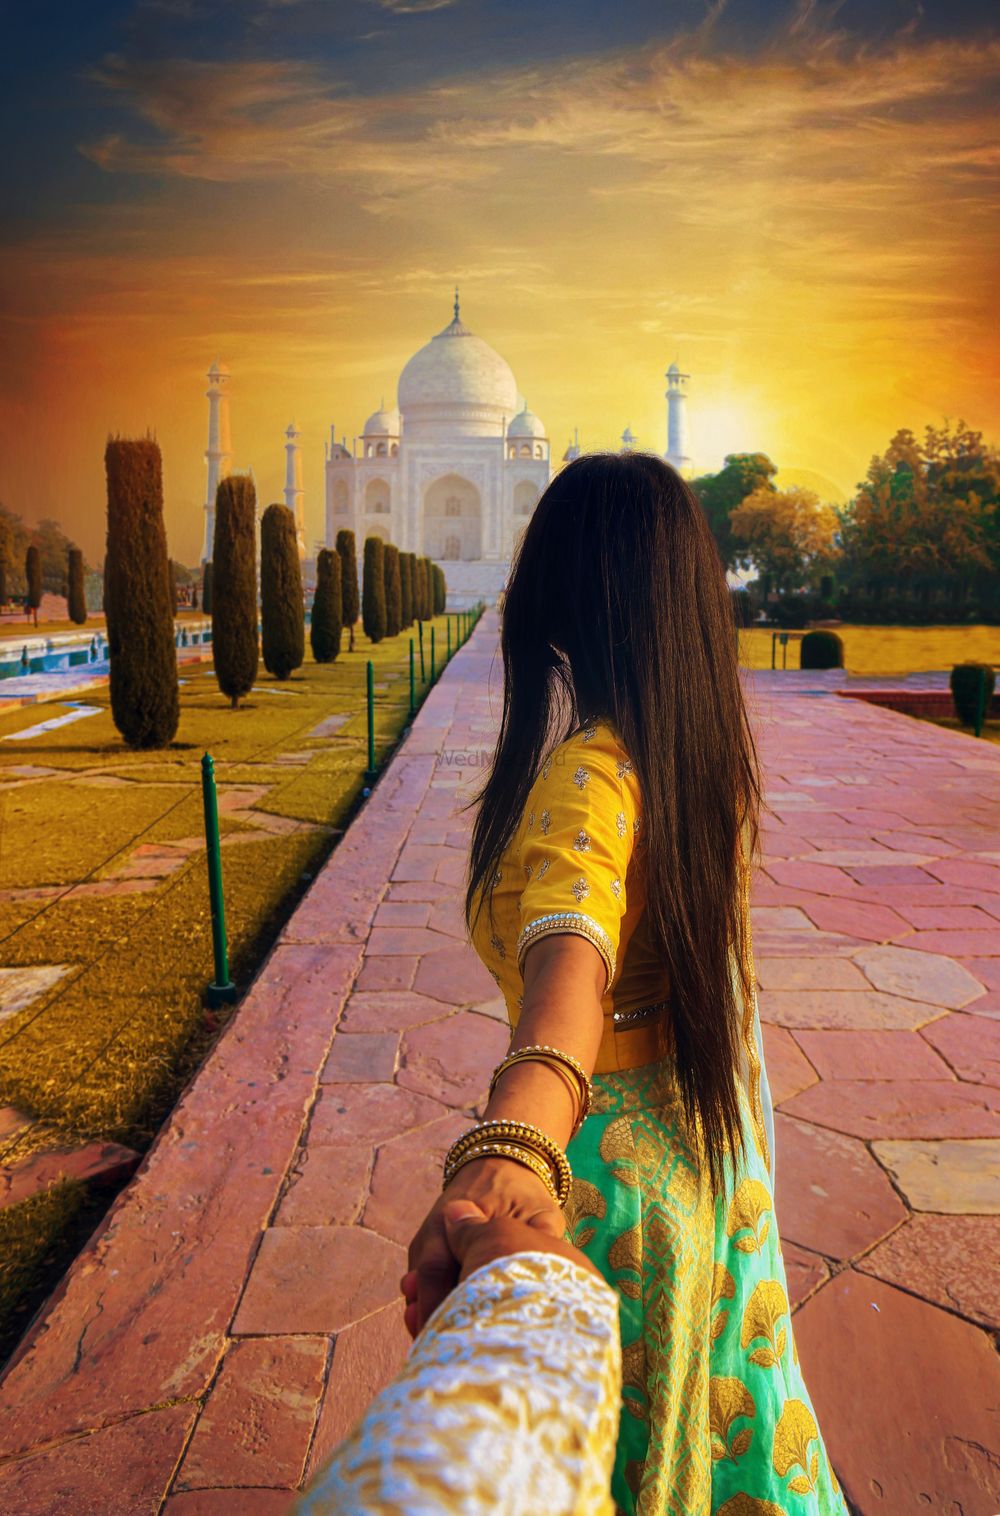 Photo From Love story of anoj & sana from switzerland to Taj mahal - By Durgesh Shahu Photography